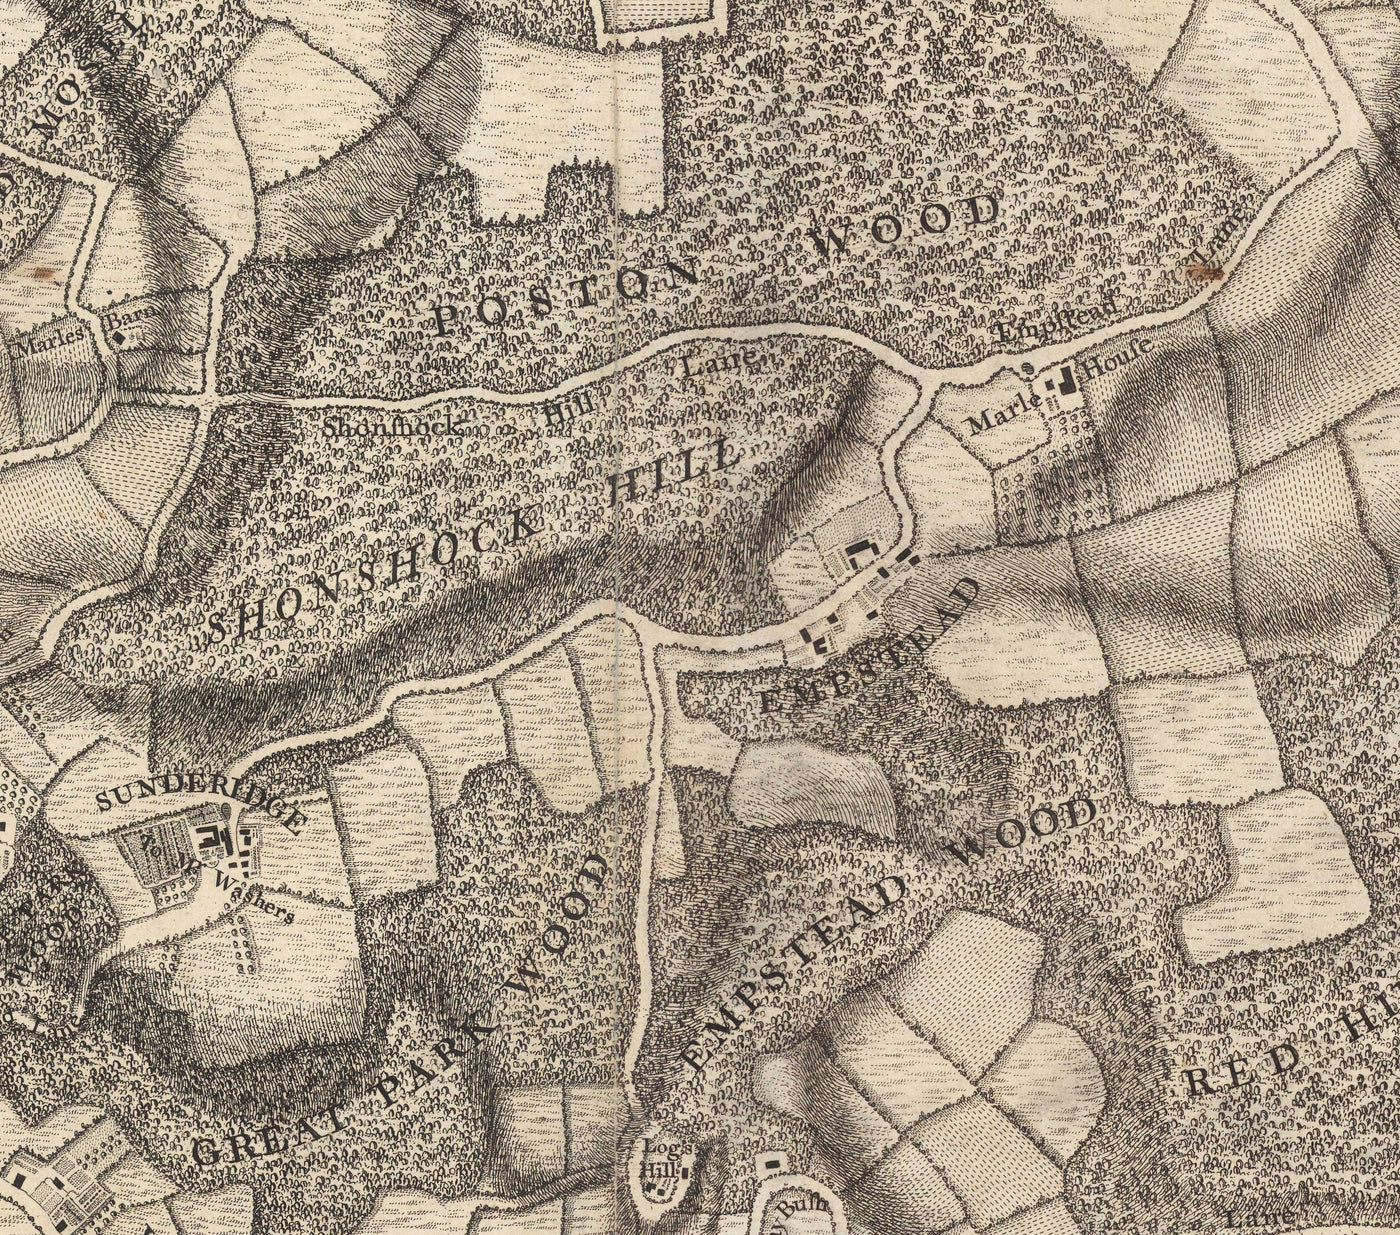 Old Map of South East London in 1746 by John Rocque - Chislehurst, Bromley, Mottingham, Southend, Widmore, SE6, SE12, SE9, SE13